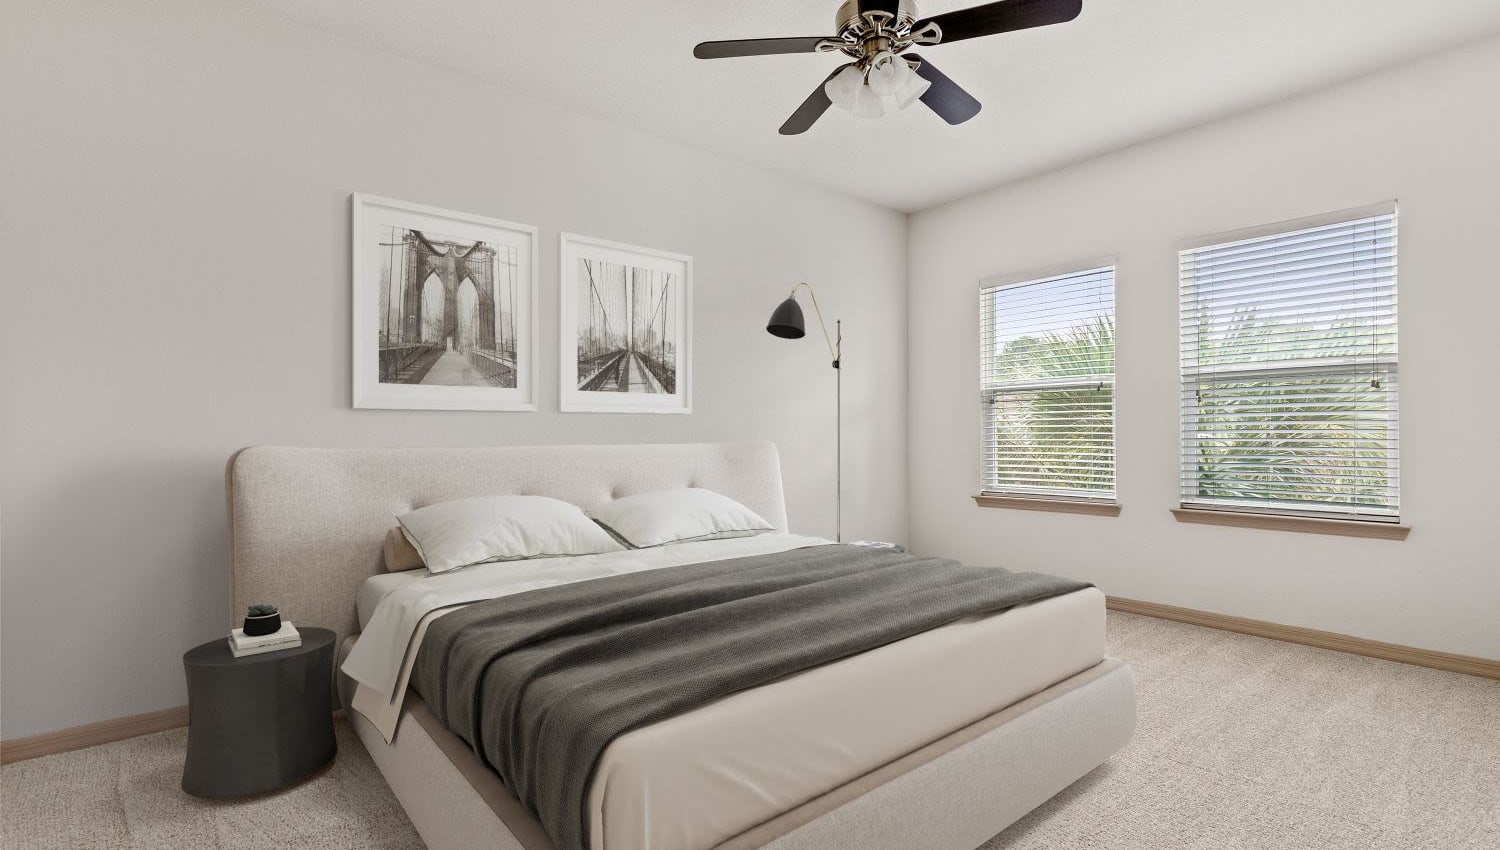 Bedroom with ceiling fan at Lakeline at Bartram Park in Jacksonville, Florida